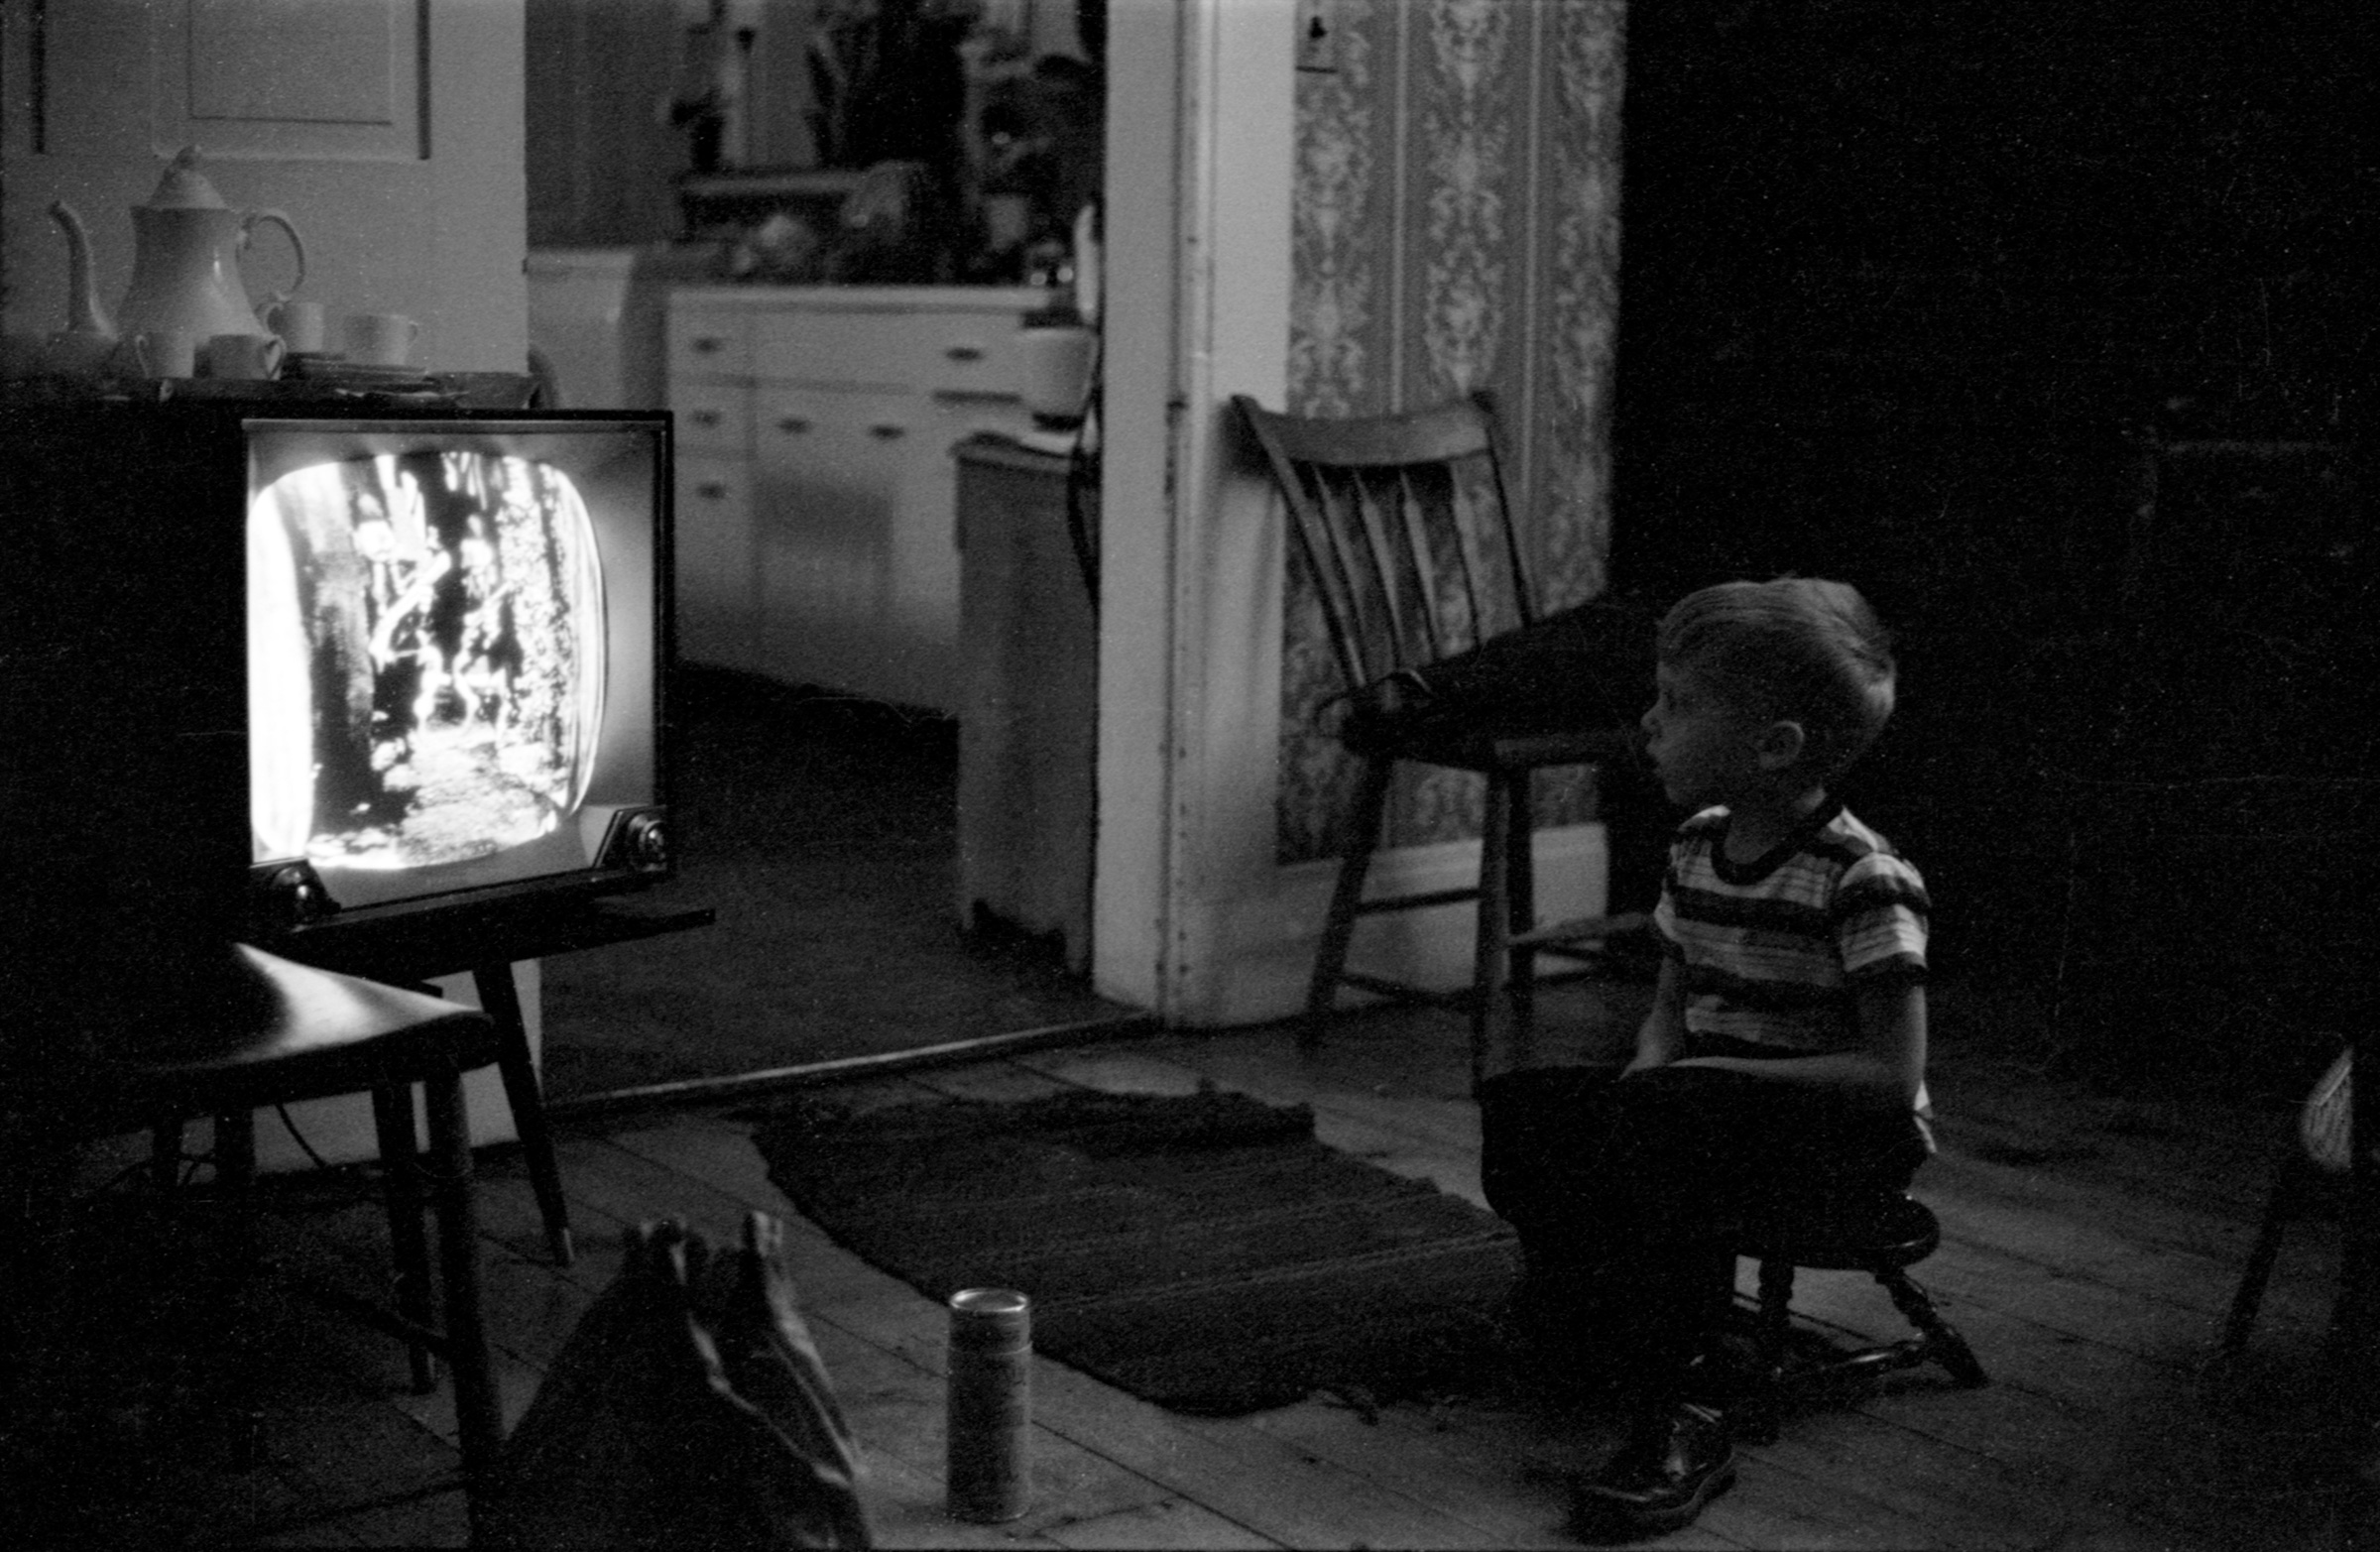 Joe-Watching-TV